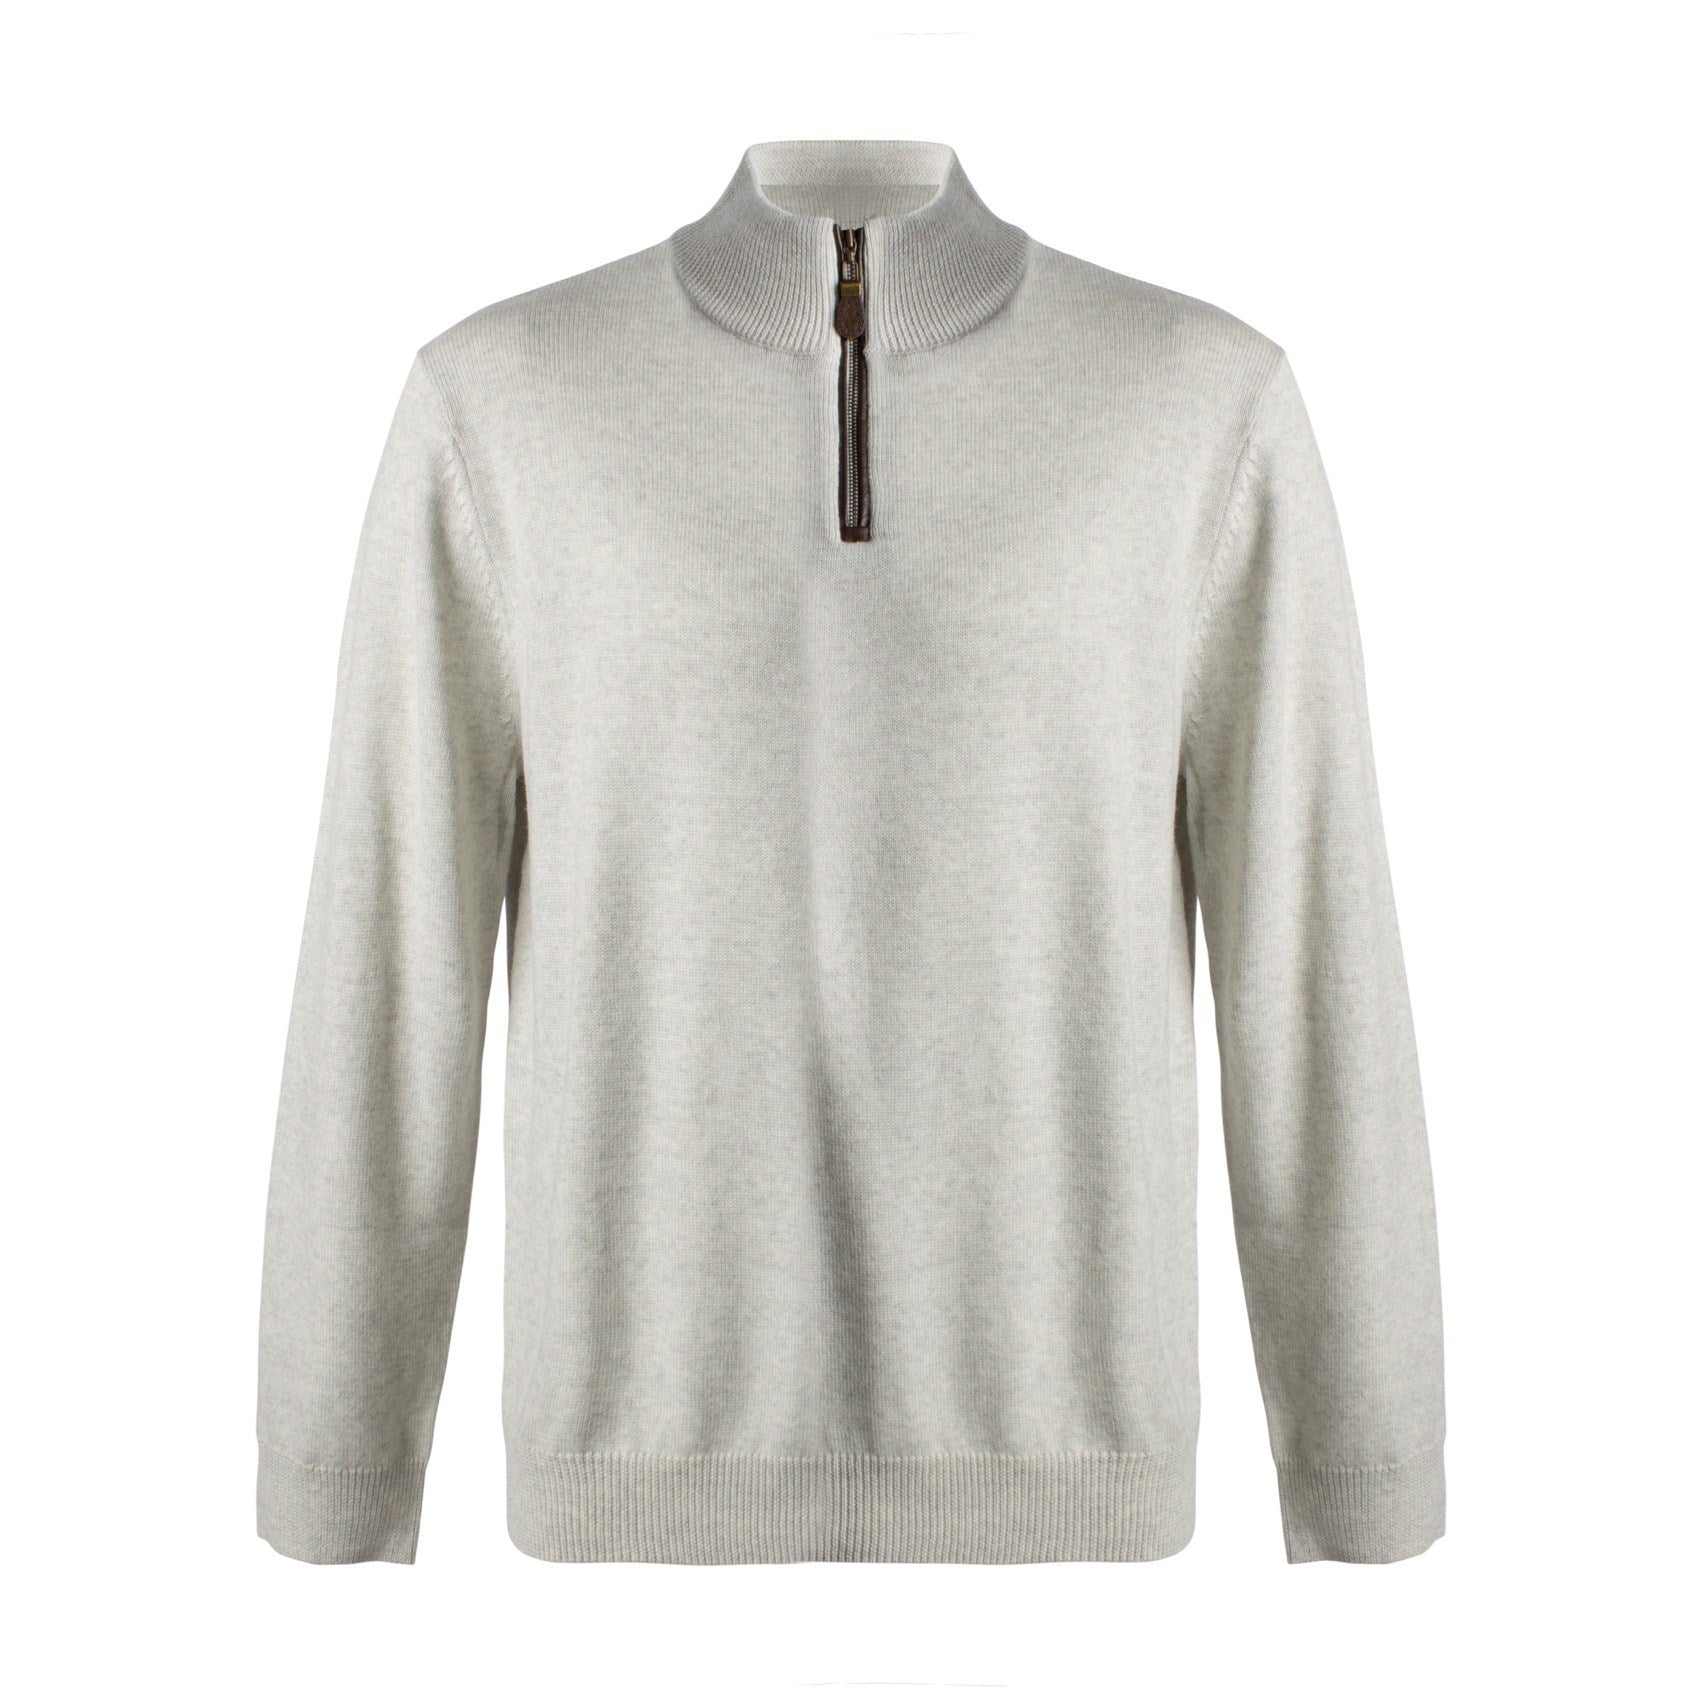 Extra Fine 'Zegna Baruffa' Merino Wool Quarter-Zip Sweater in Winter White (Size X-Large) by Viyella